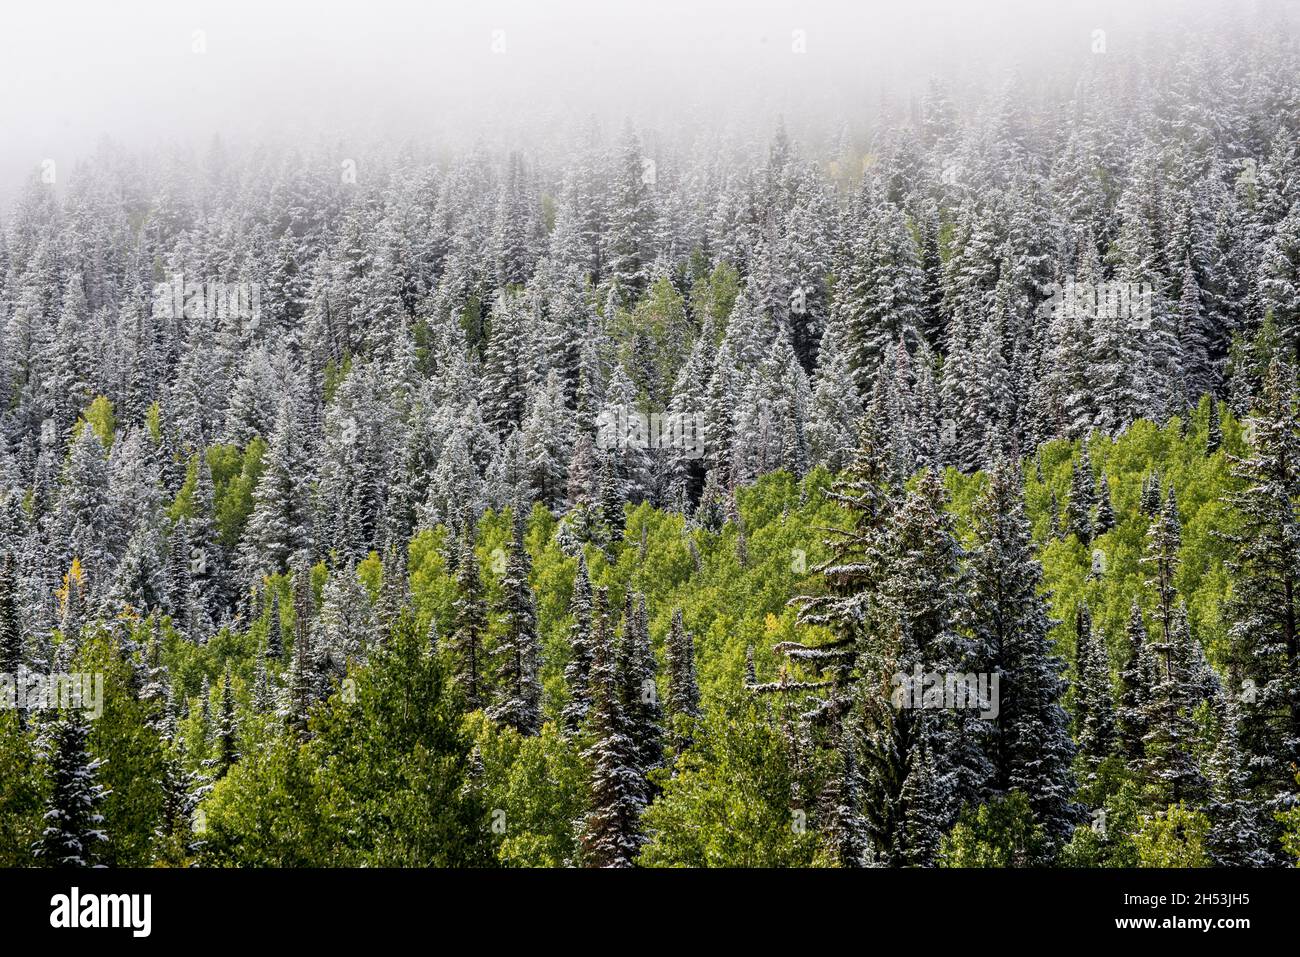 Snow - Aspen -  Spruce - Pine - Winter Fog - Wasatch Mountains - Salt Lake City, Utah Stock Photo